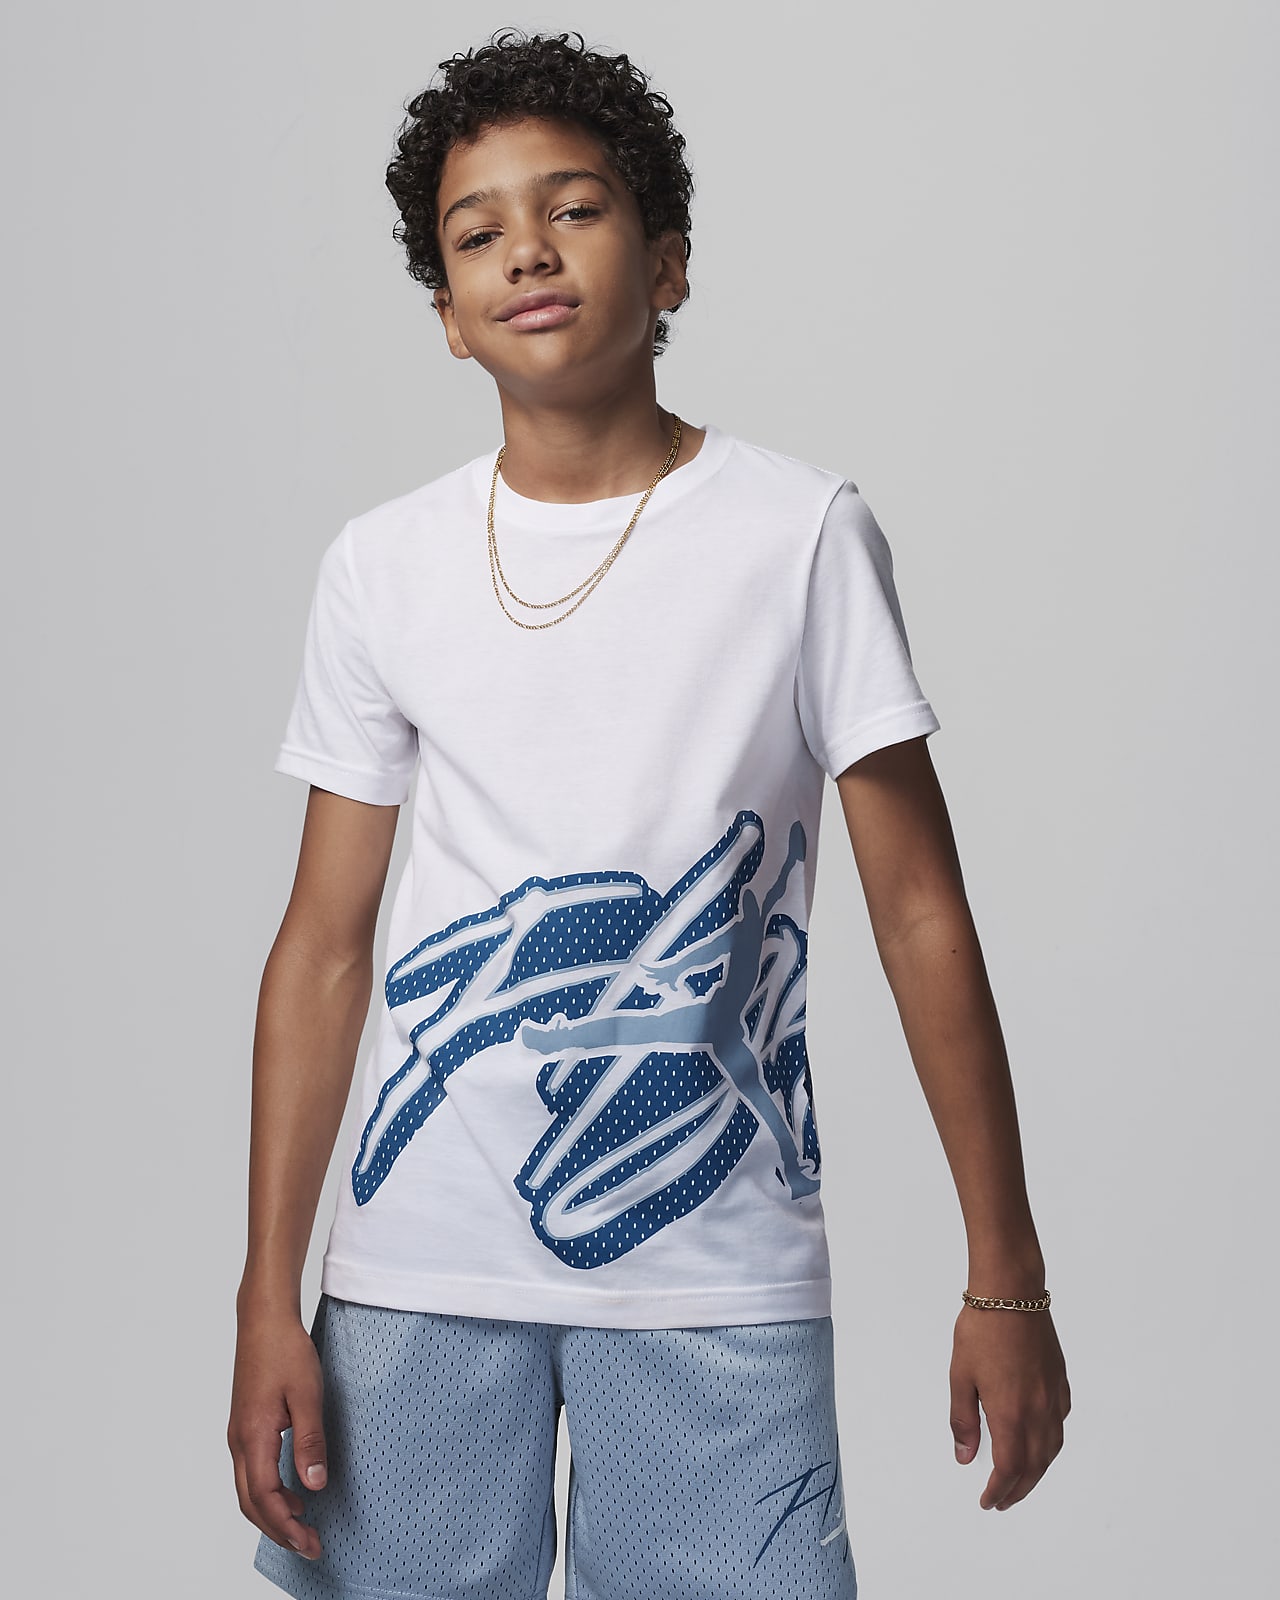 Camiseta Jordan Faded Flight Niños-Blanco NIKE